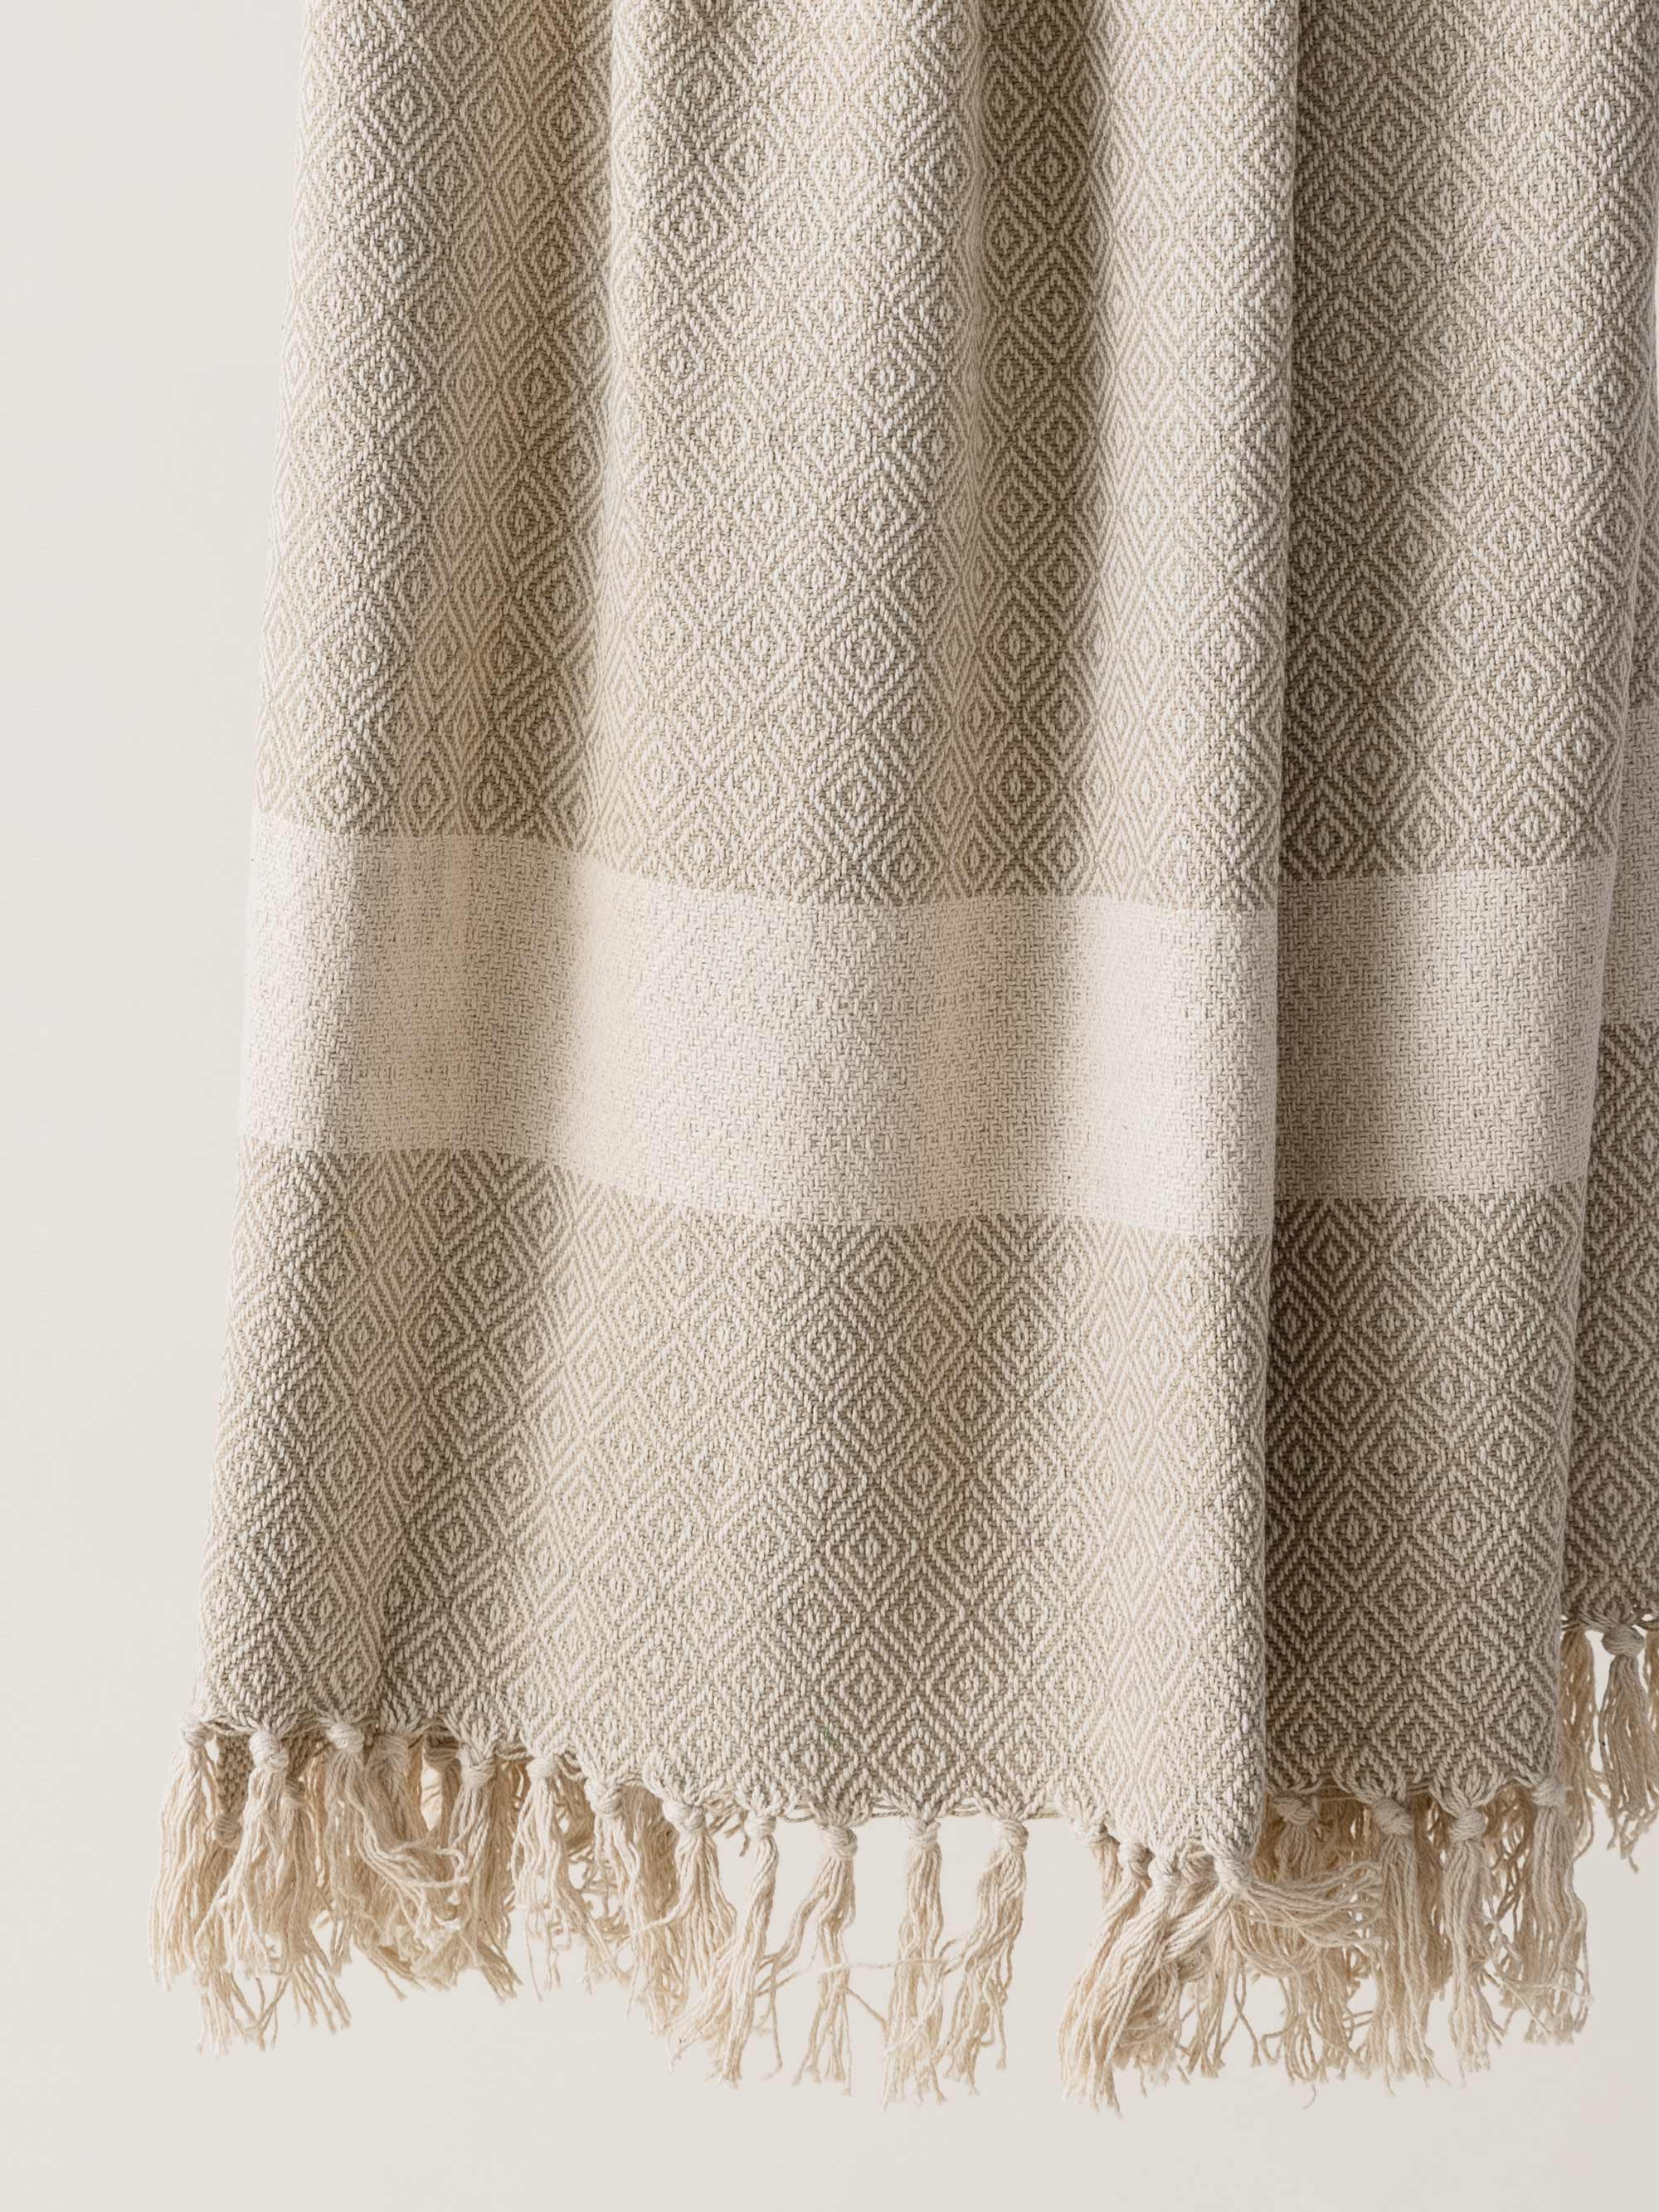 Striped Cotton Blanket